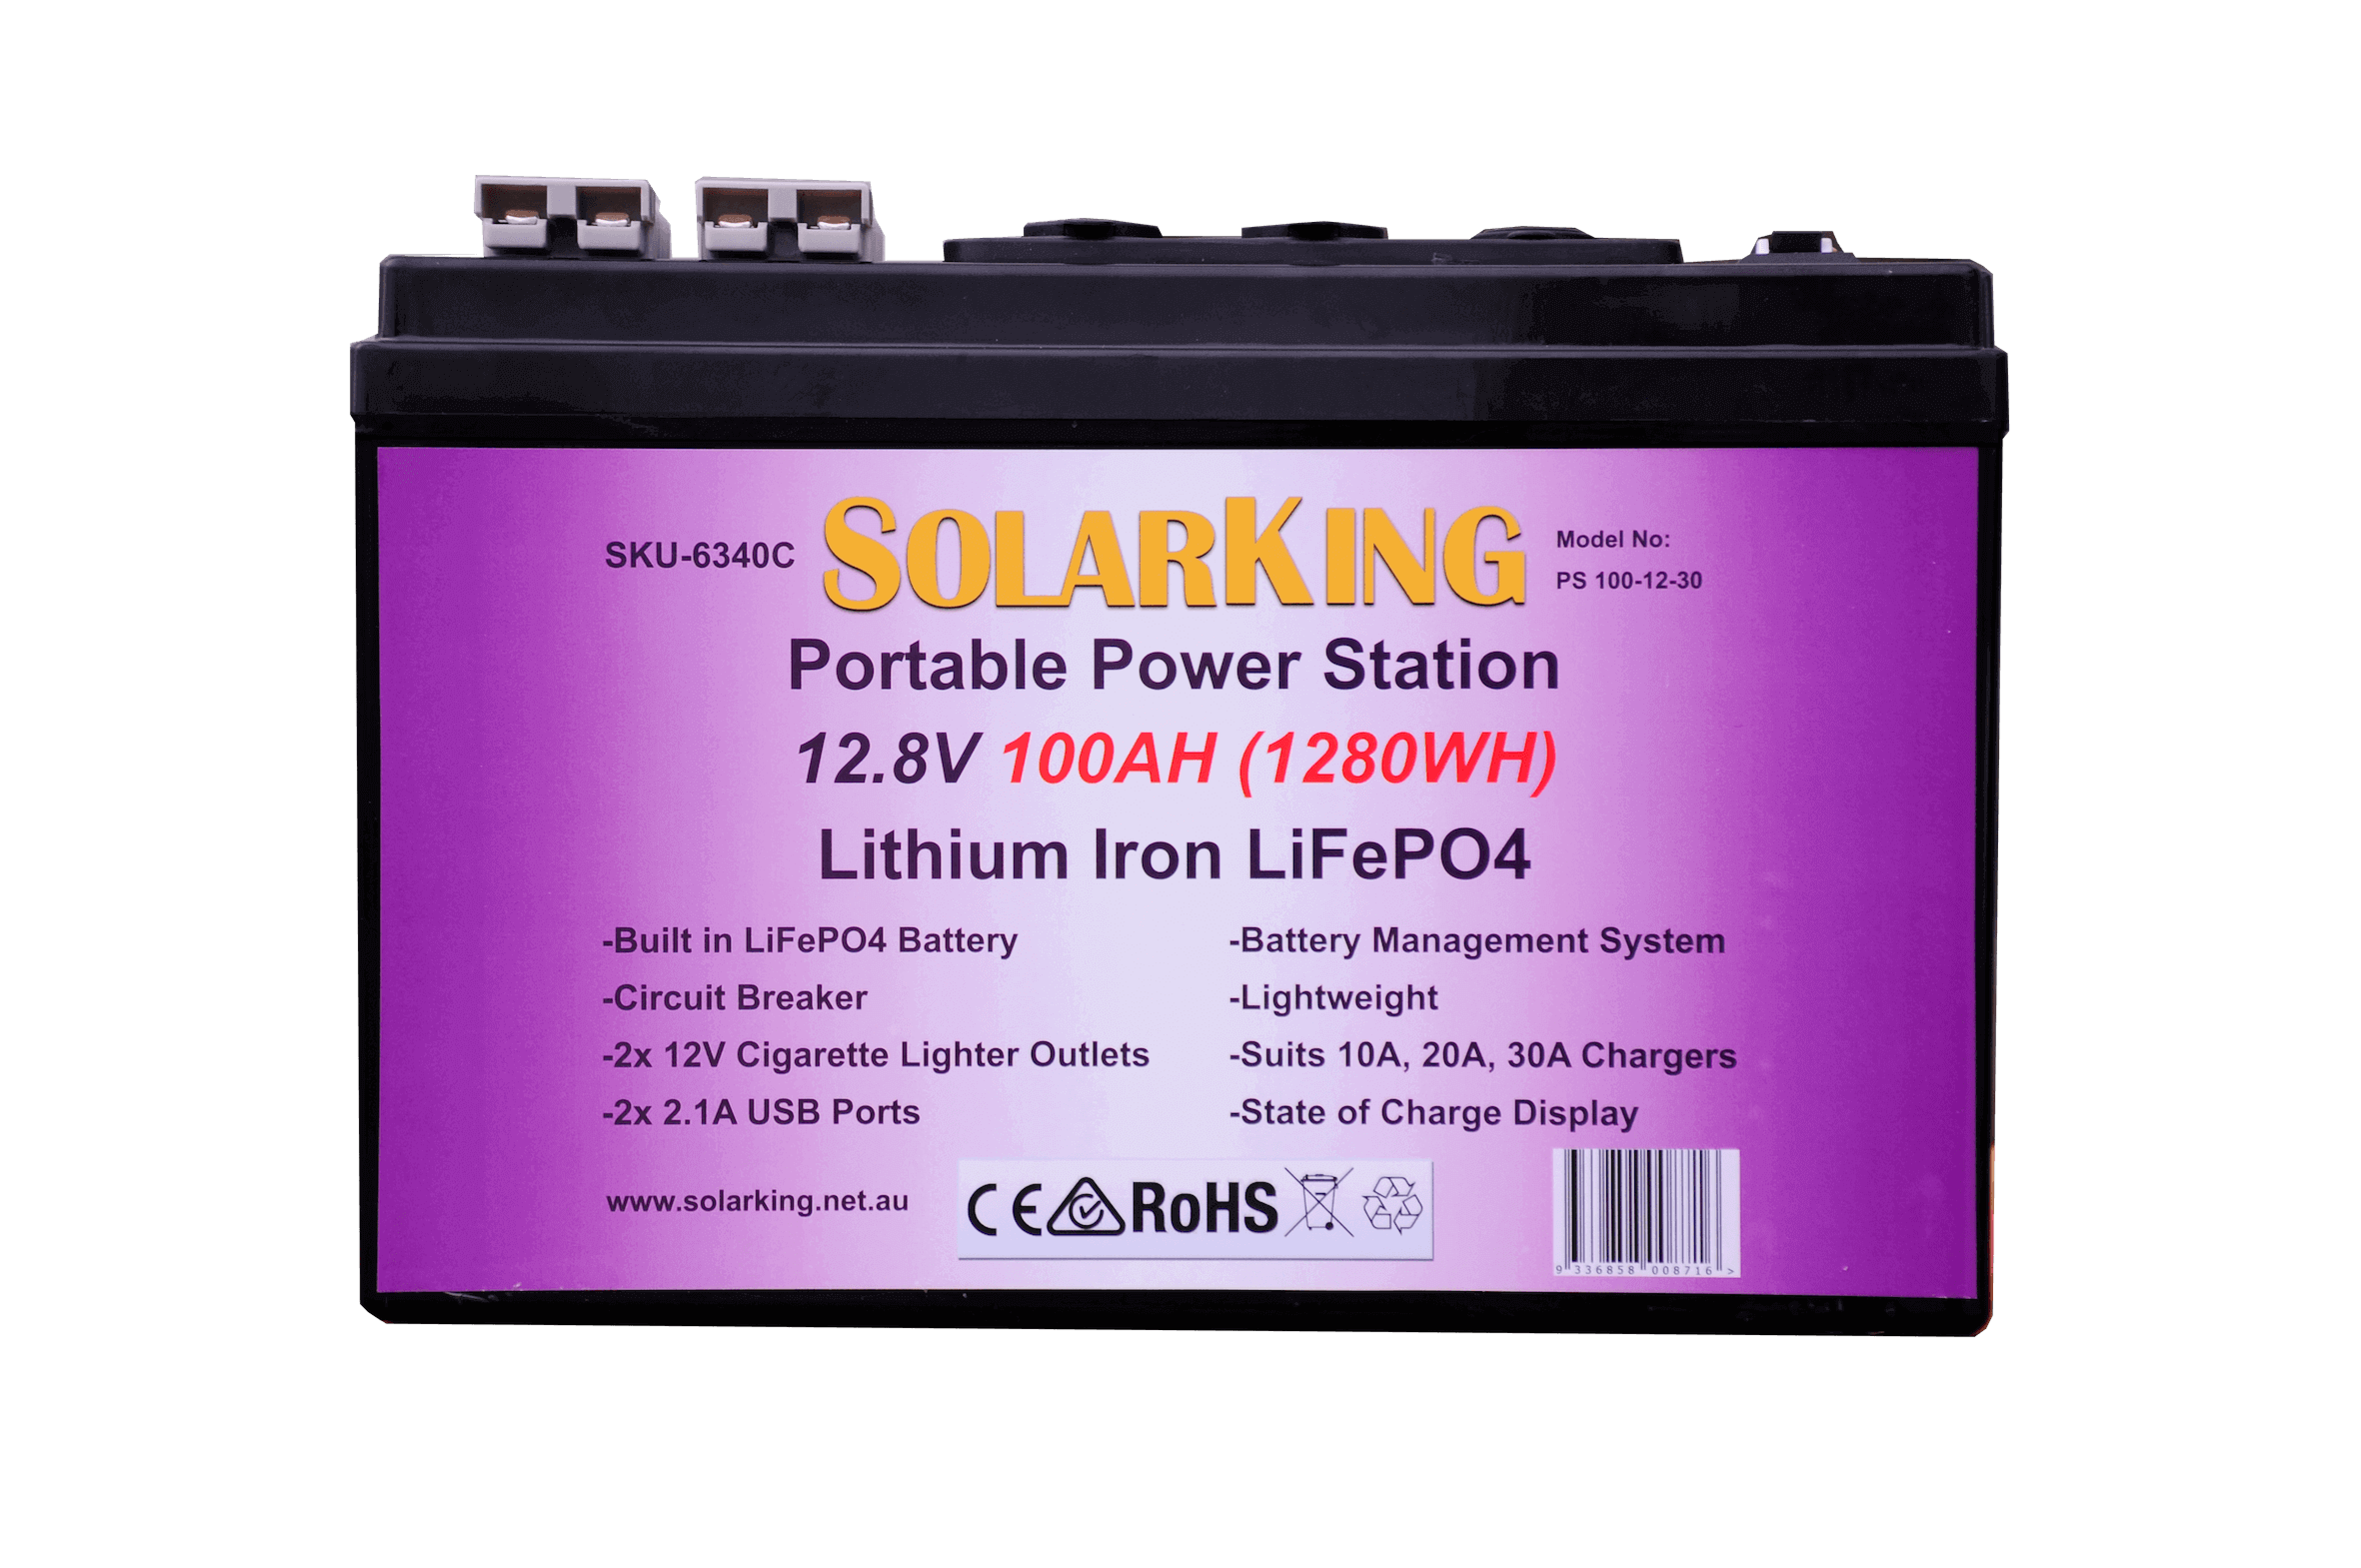 100AH 12.8VDC Lithium Iron SolarKing Battery PS 100-12-30